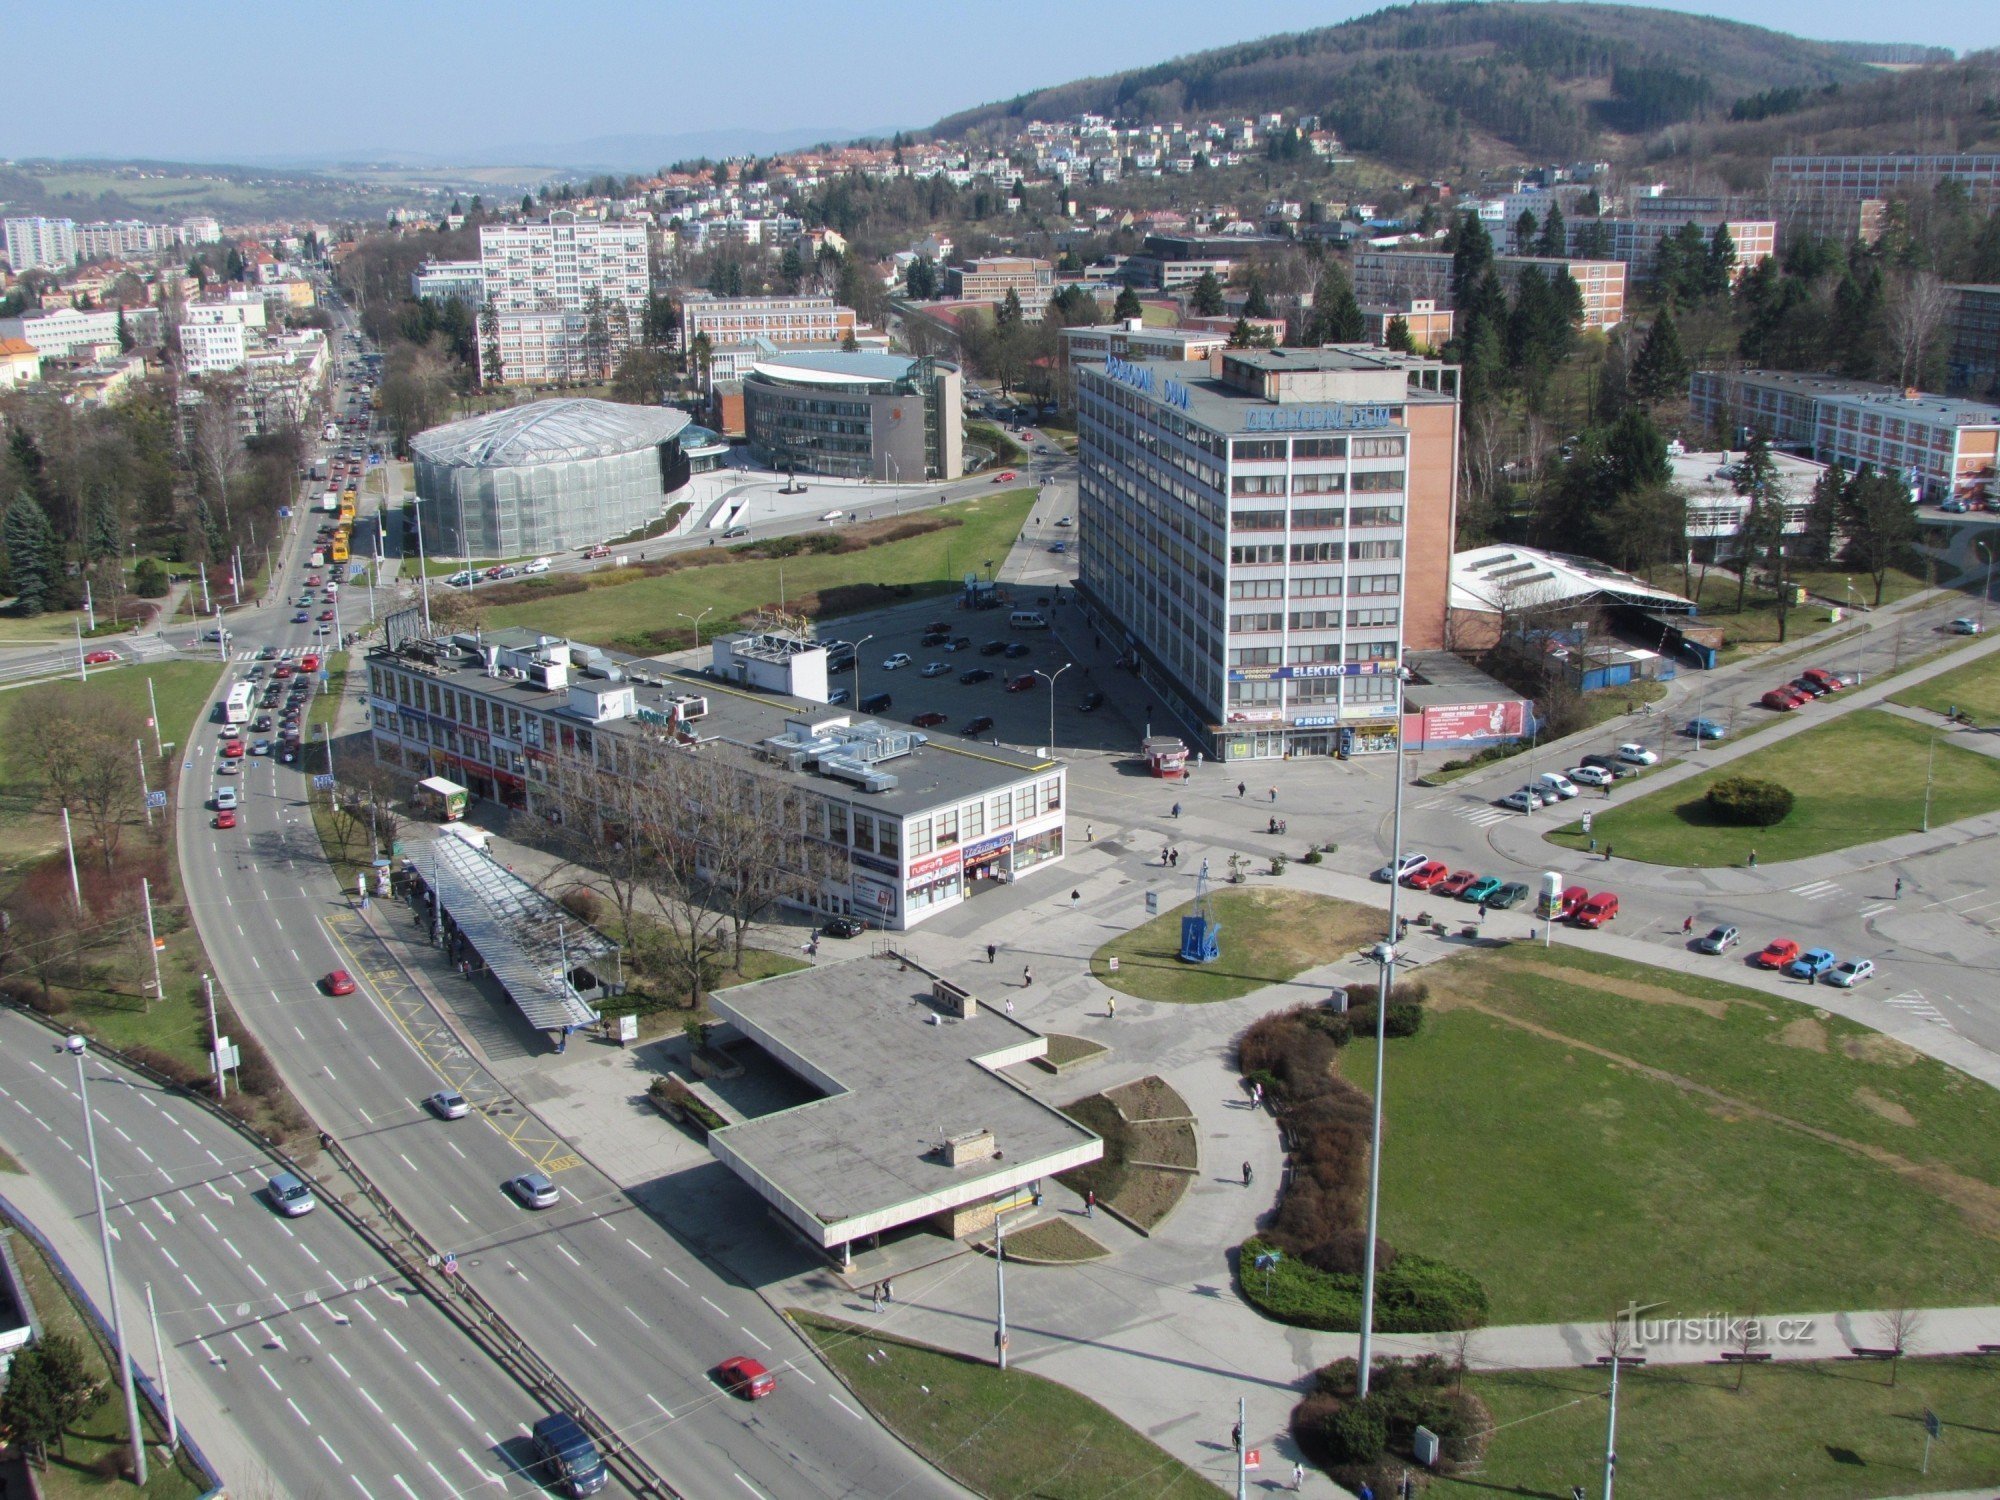 the newer center of Zlín